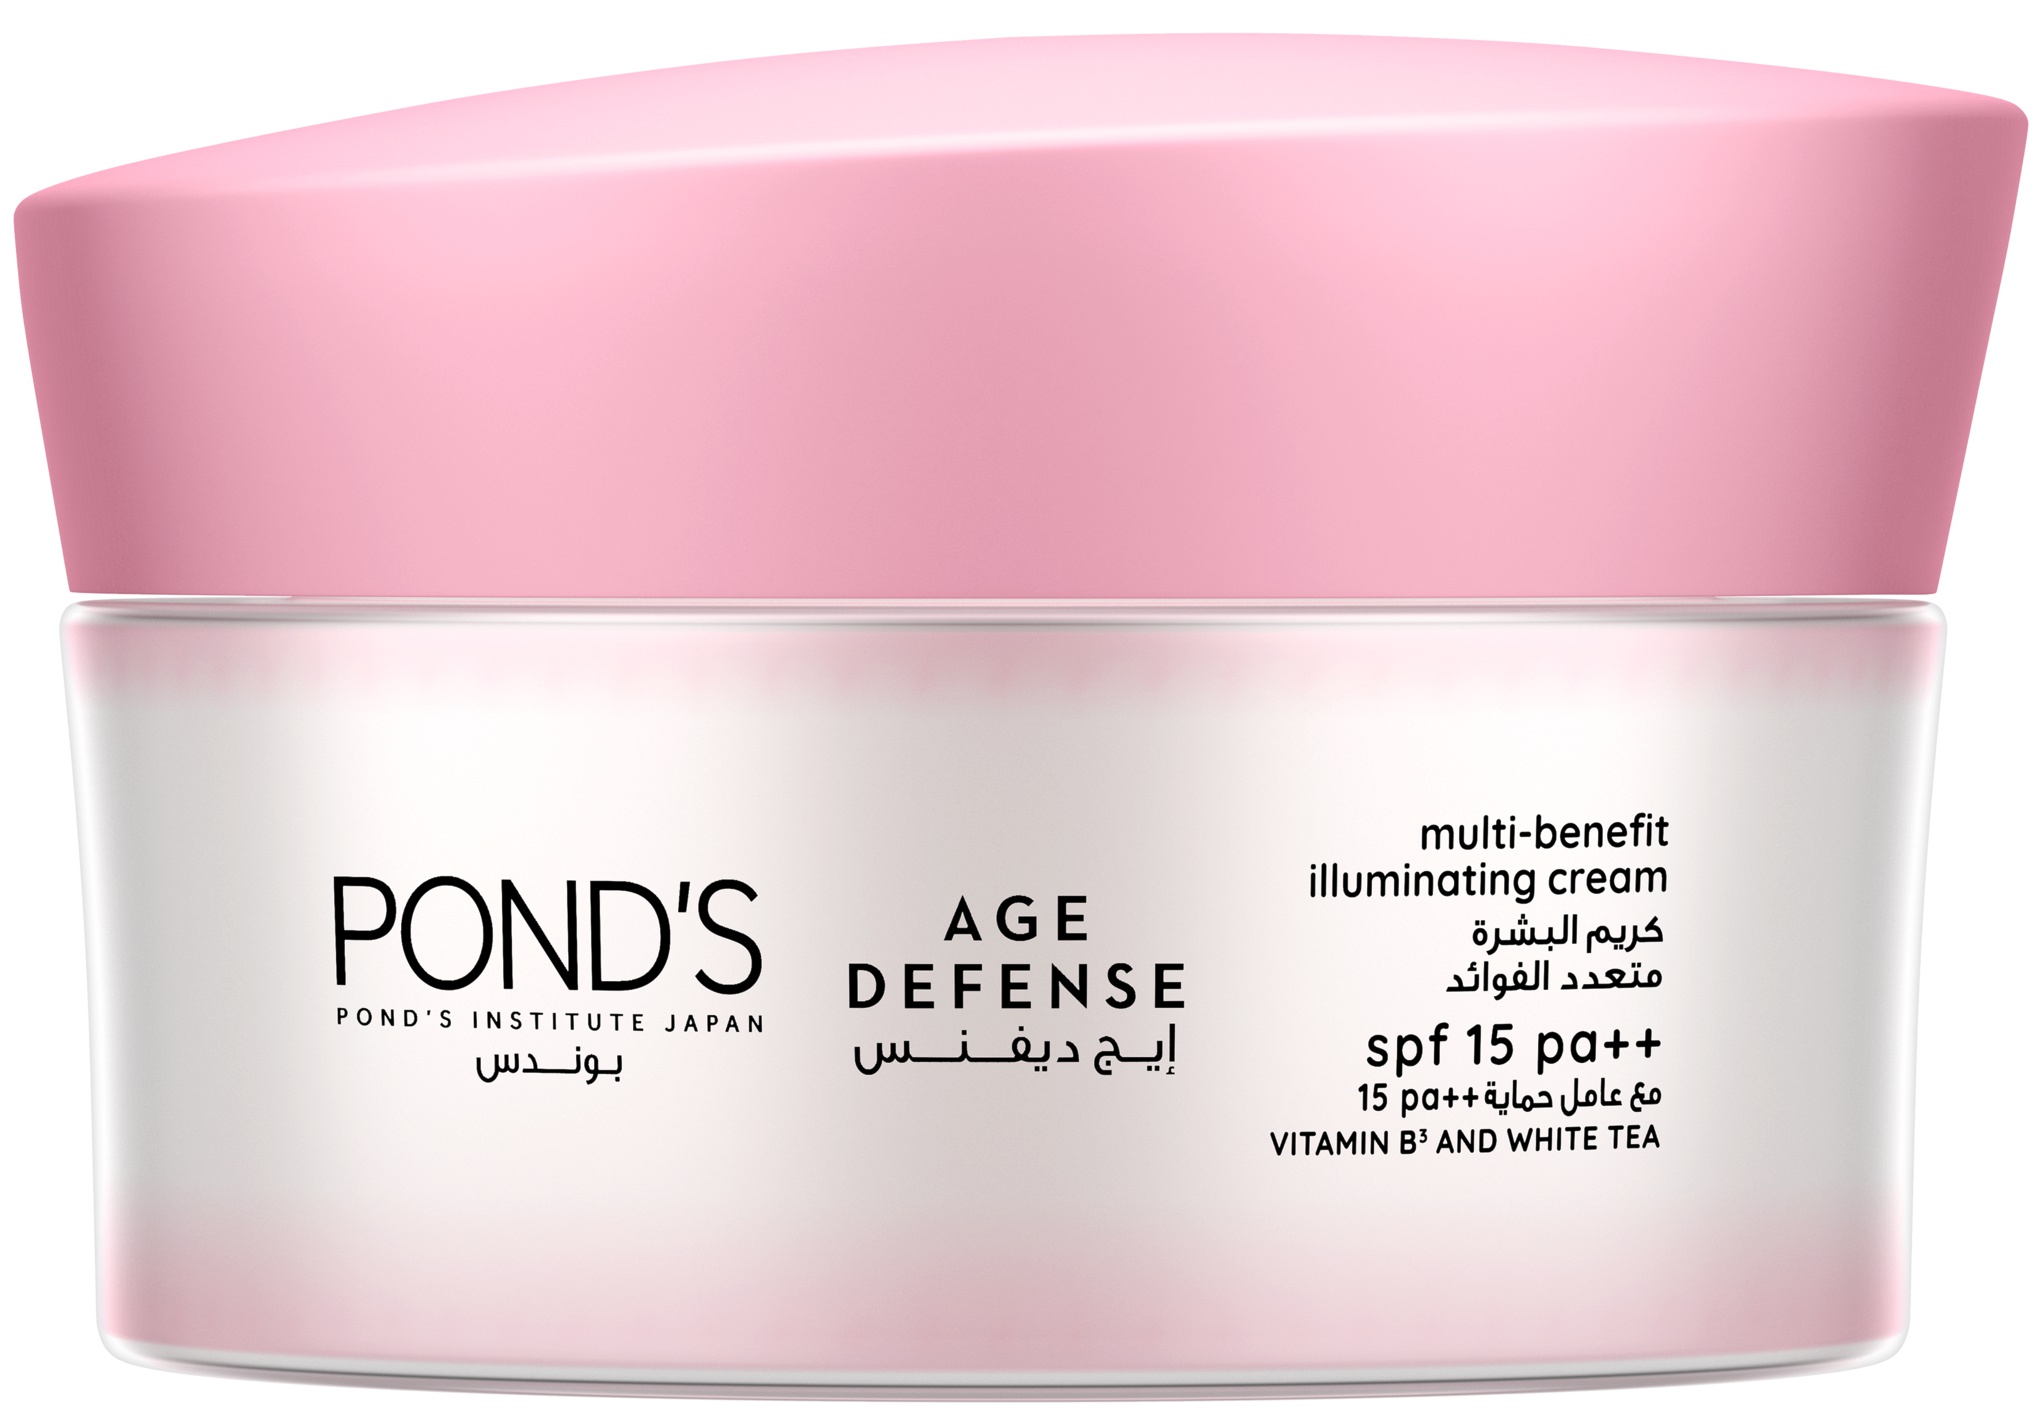 Pond's Age Defense Multi-benefit Illuminating Day Cream